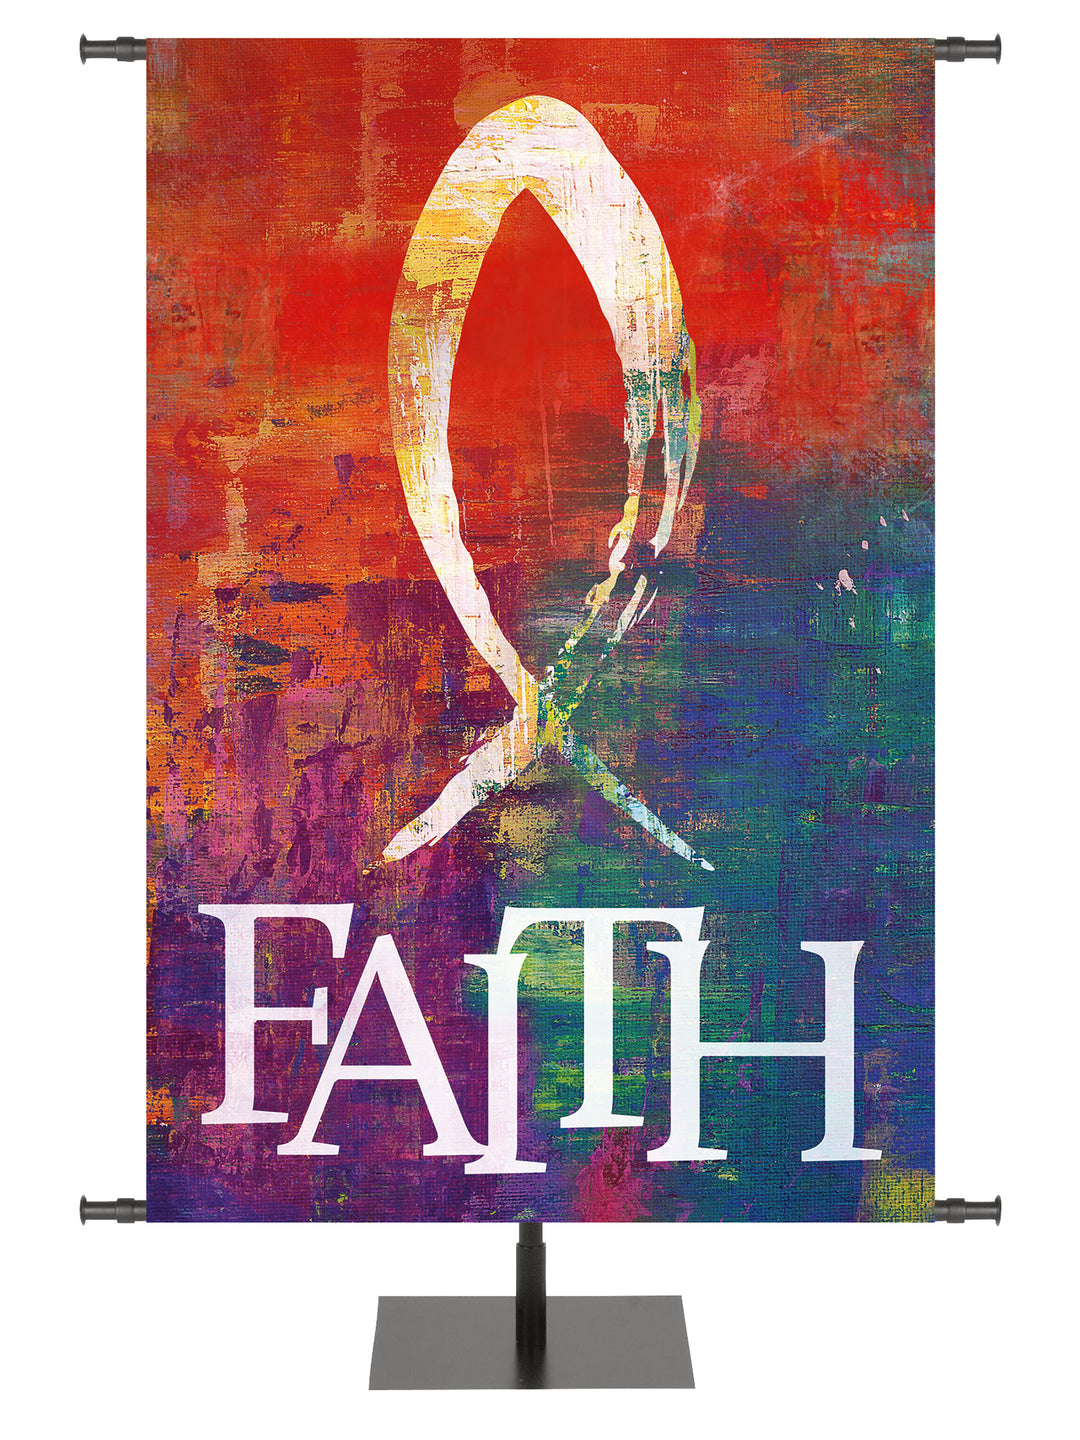 Brush Strokes of Faith Fish and Faith - Year Round Banners - PraiseBanners